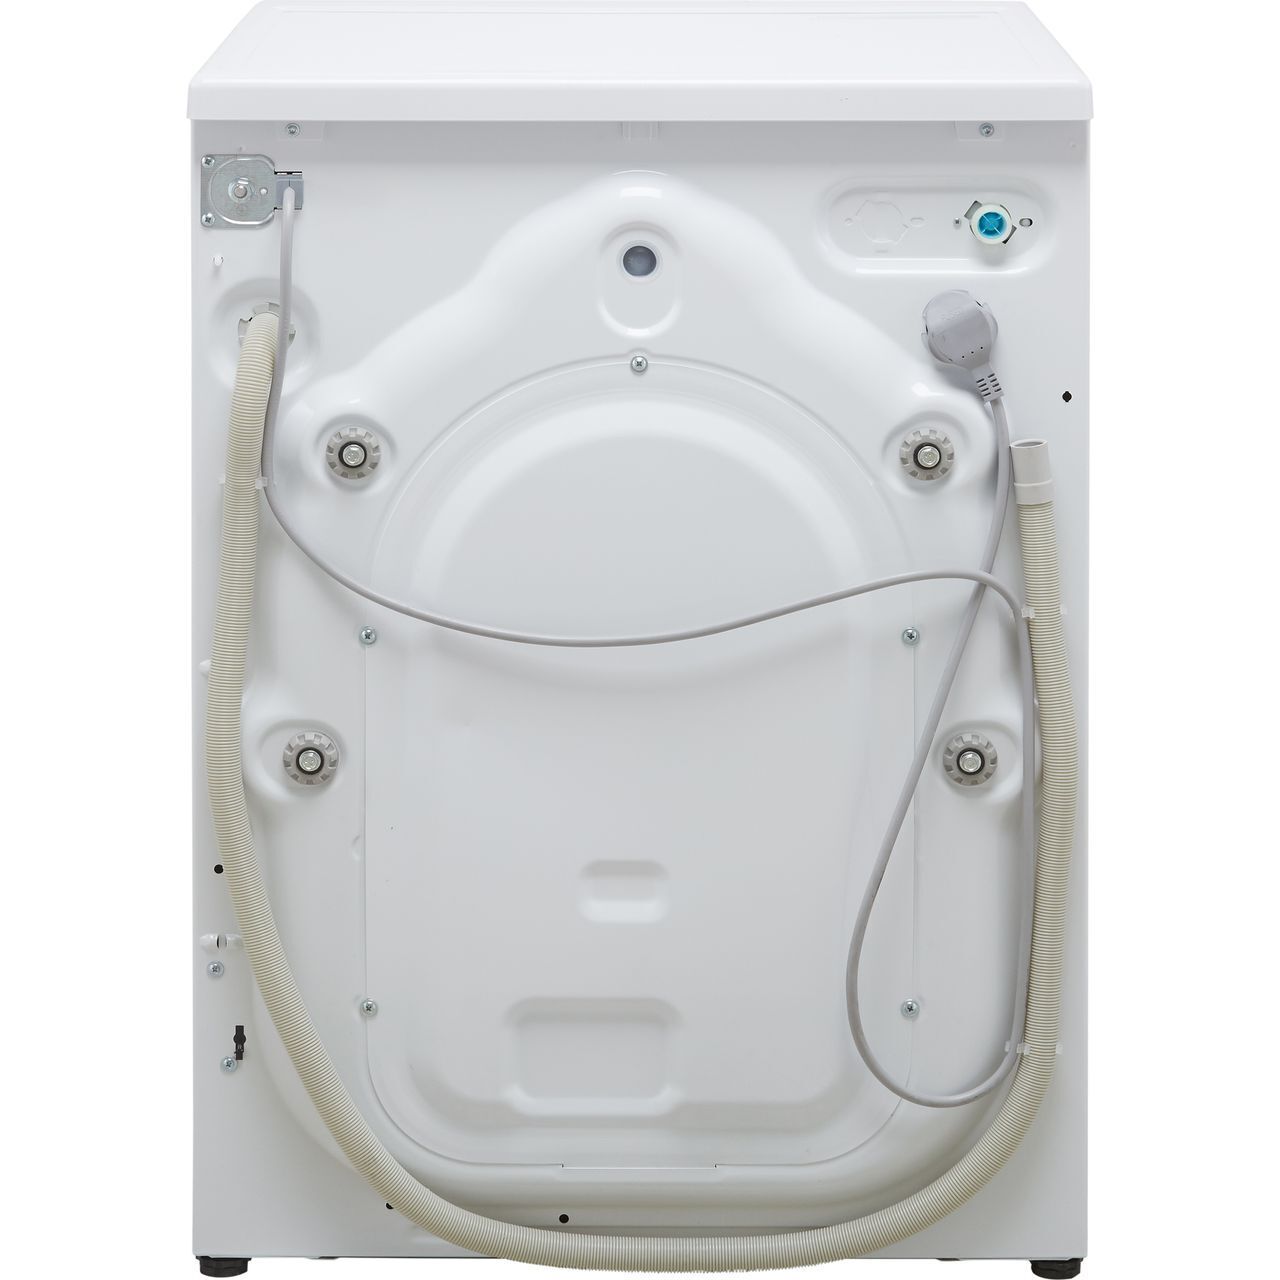 Beko 9kg 1200rpm White Washing Machine